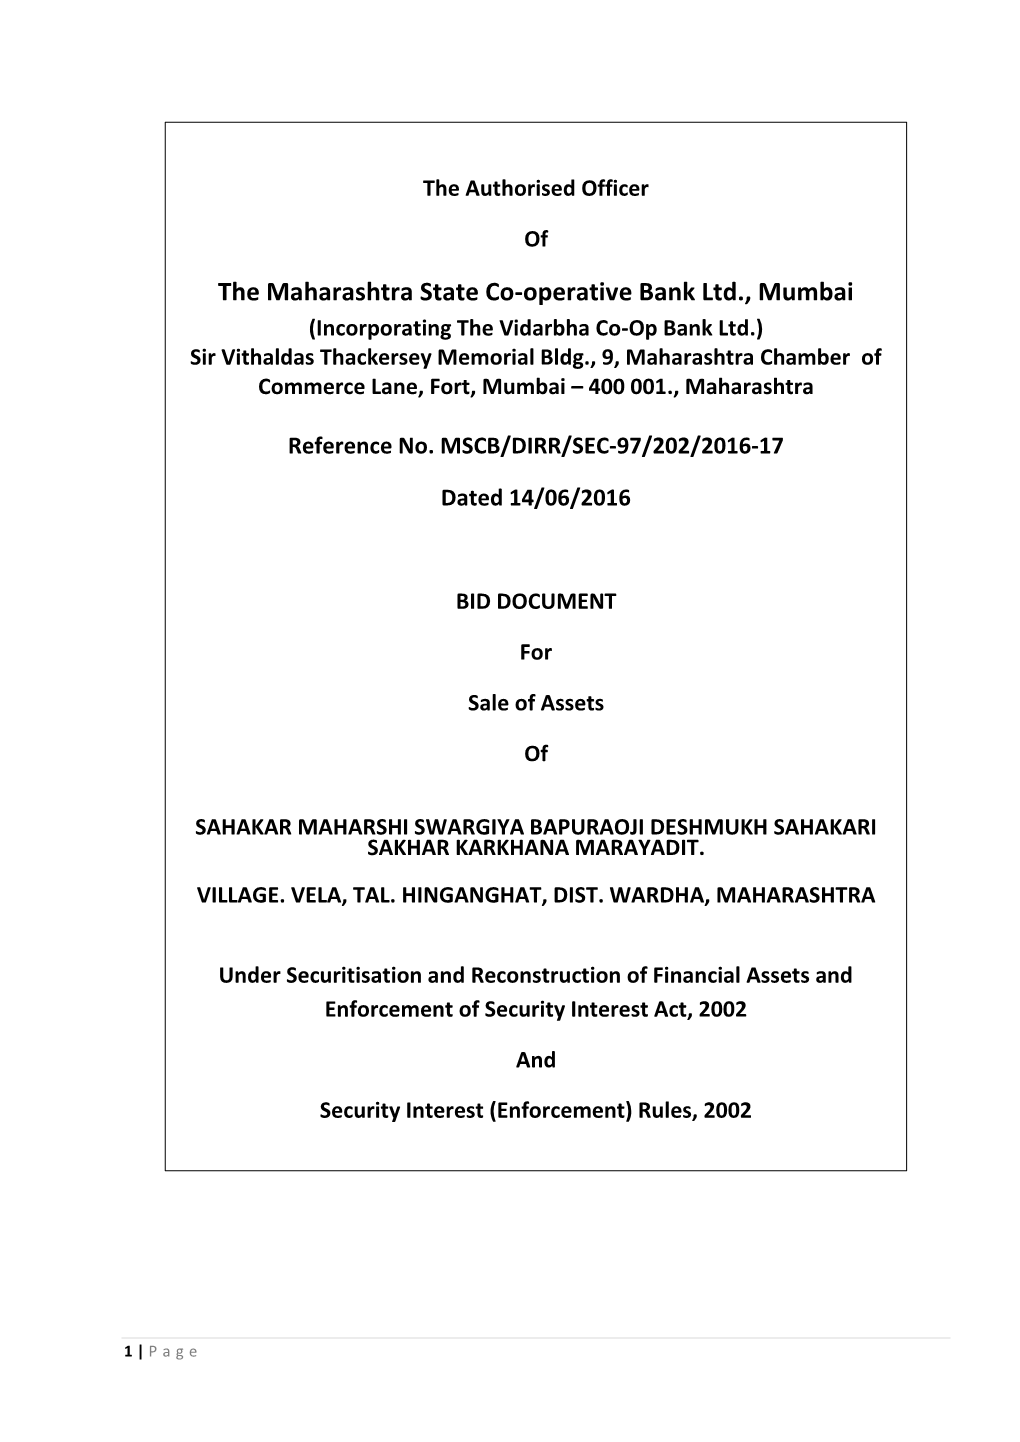 The Maharashtra State Co-Operative Bank Ltd., Mumbai